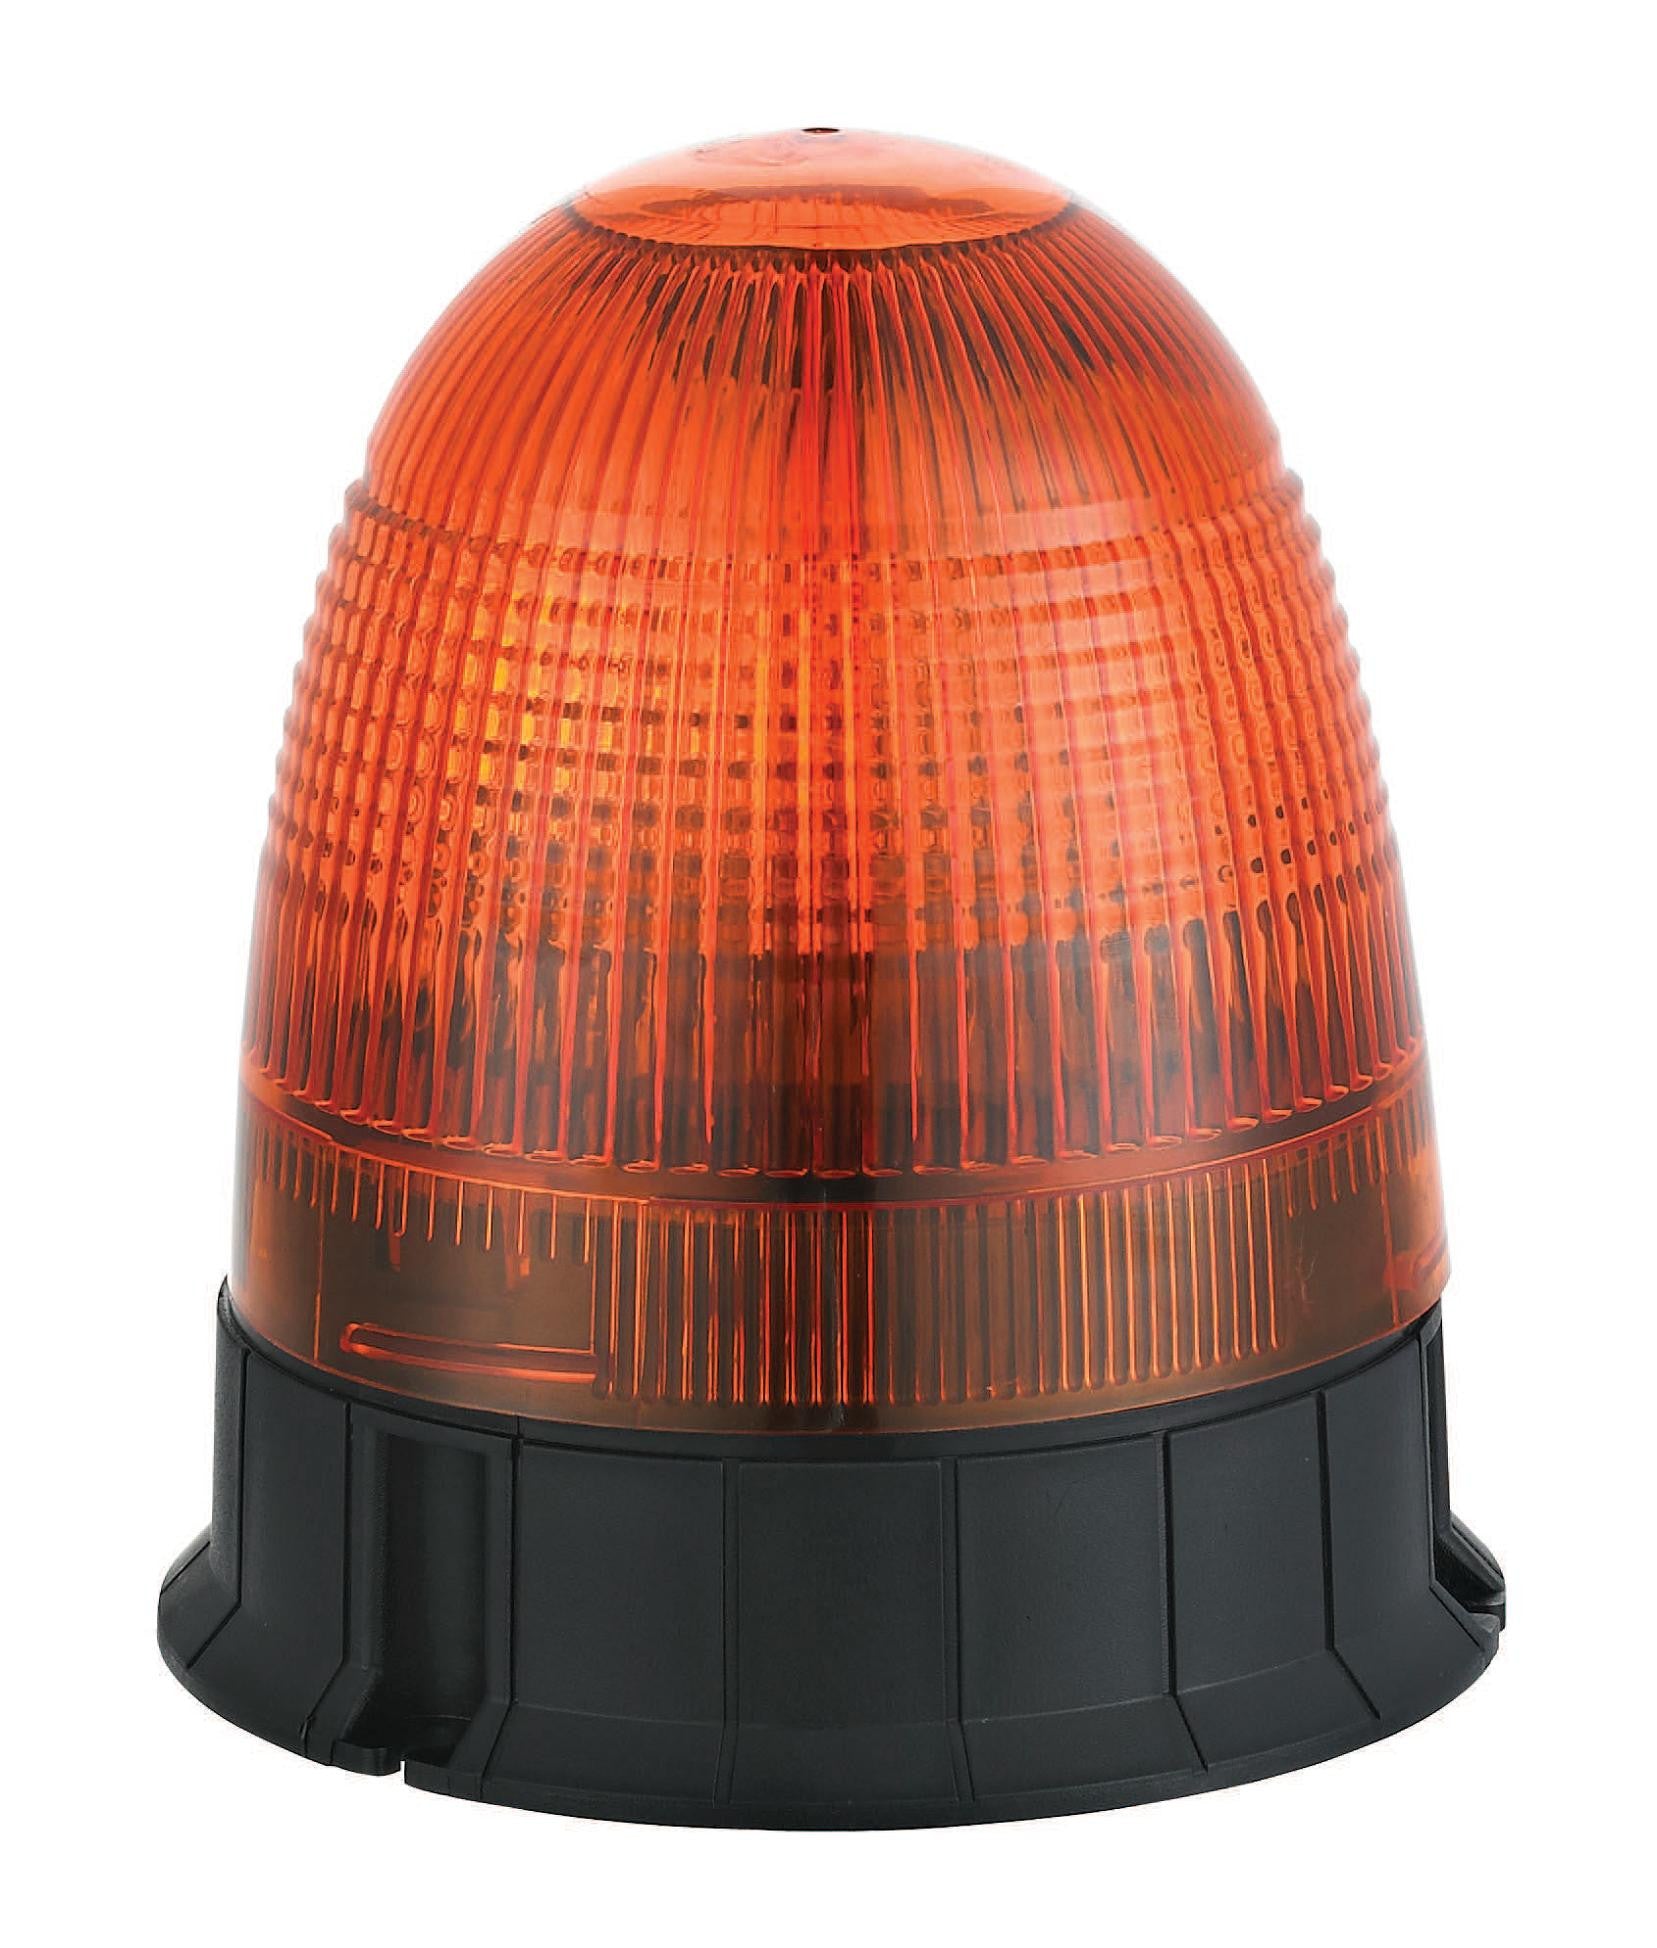 Buy Buy LED Flashing Beacons Best Price Safety Warning Beacon